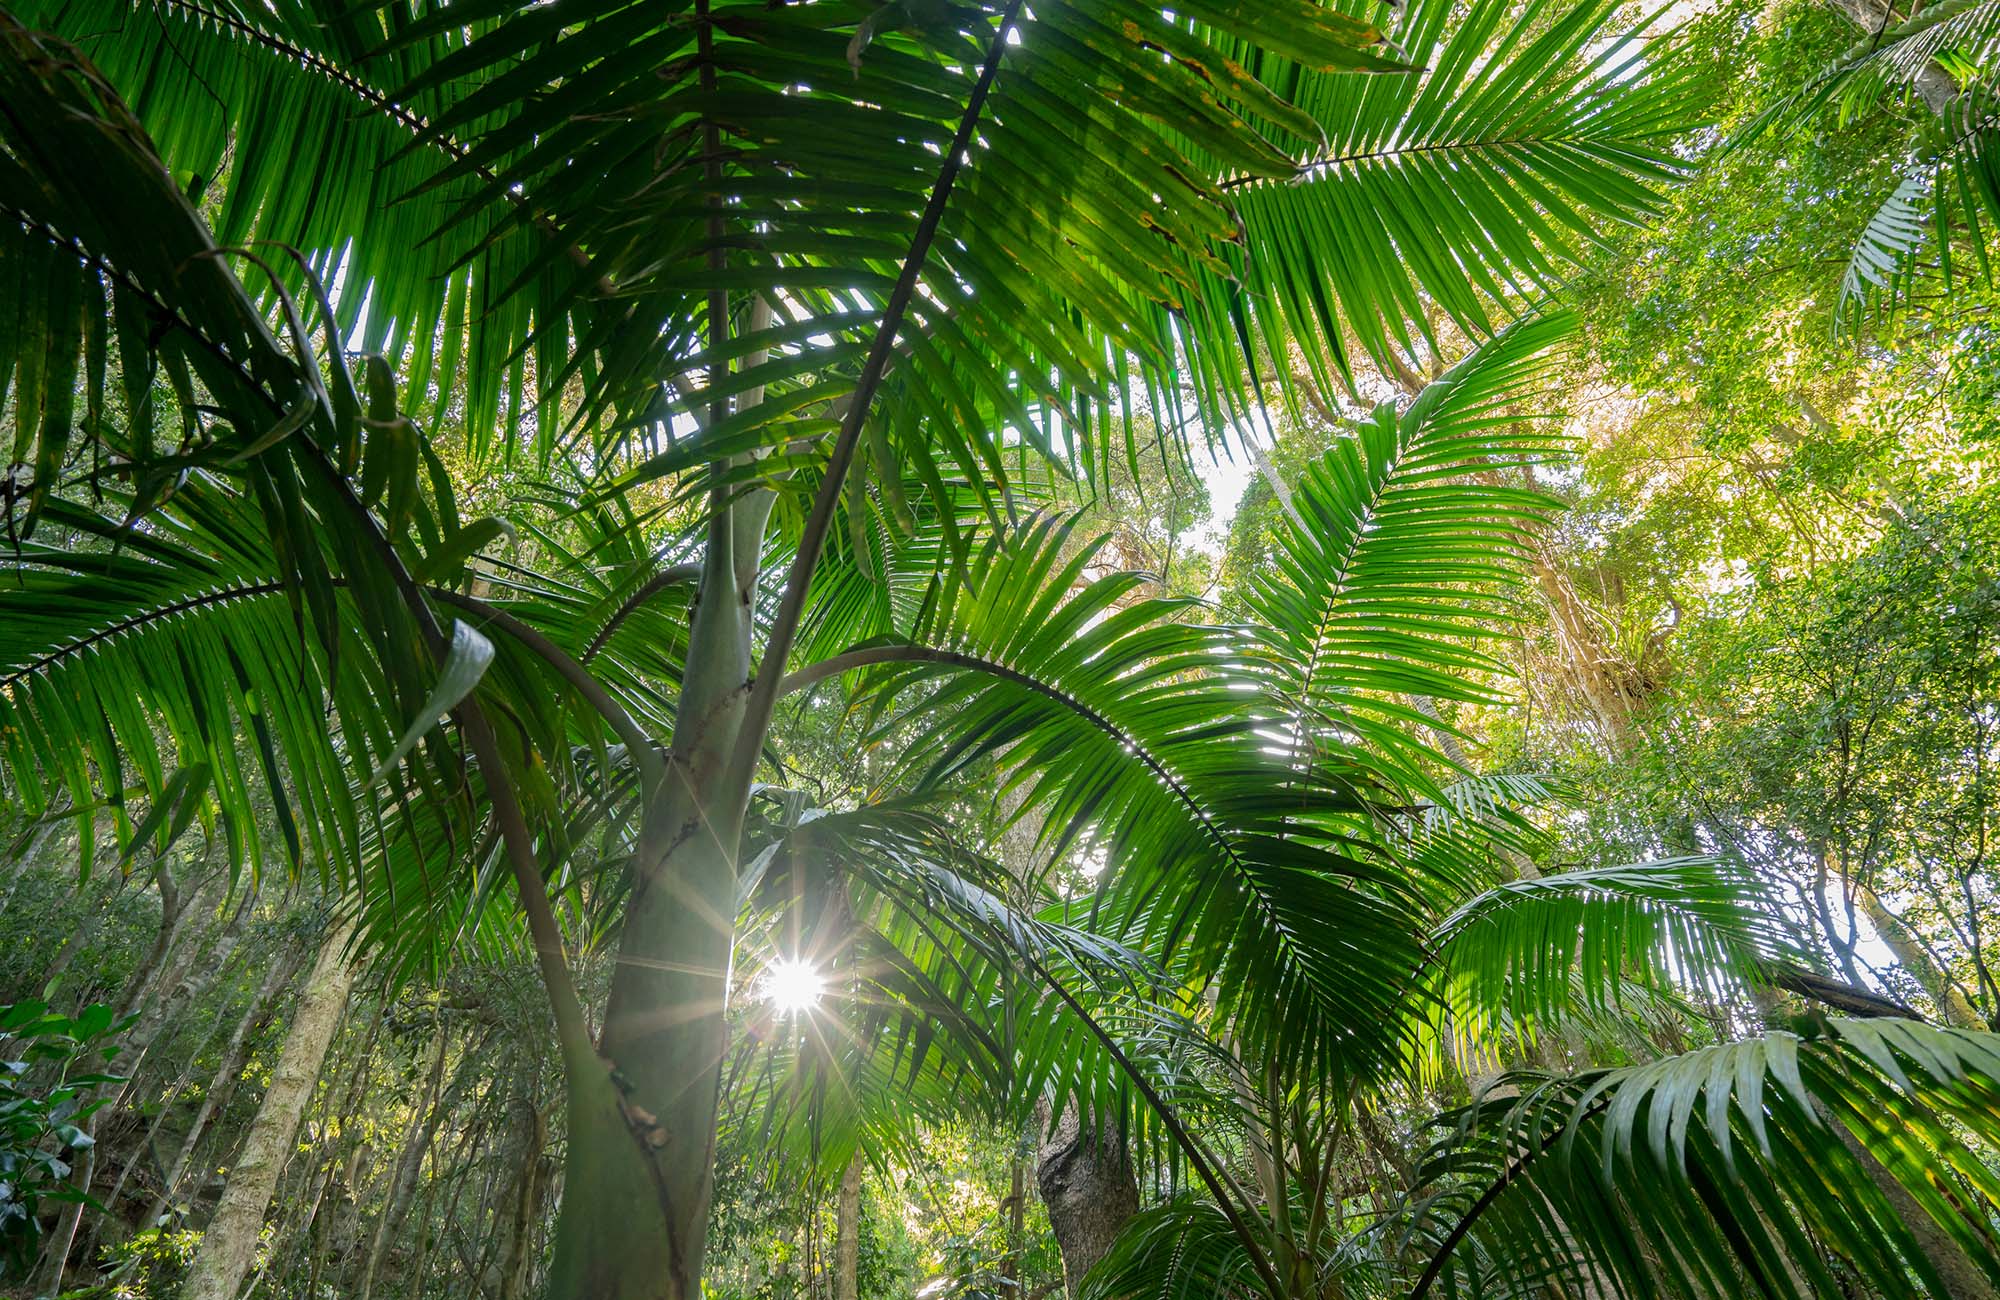 A bangalow palm, Minnamurra Falls walk, Budderoo National Park. Photo credit: John Spencer &copy; DPIE